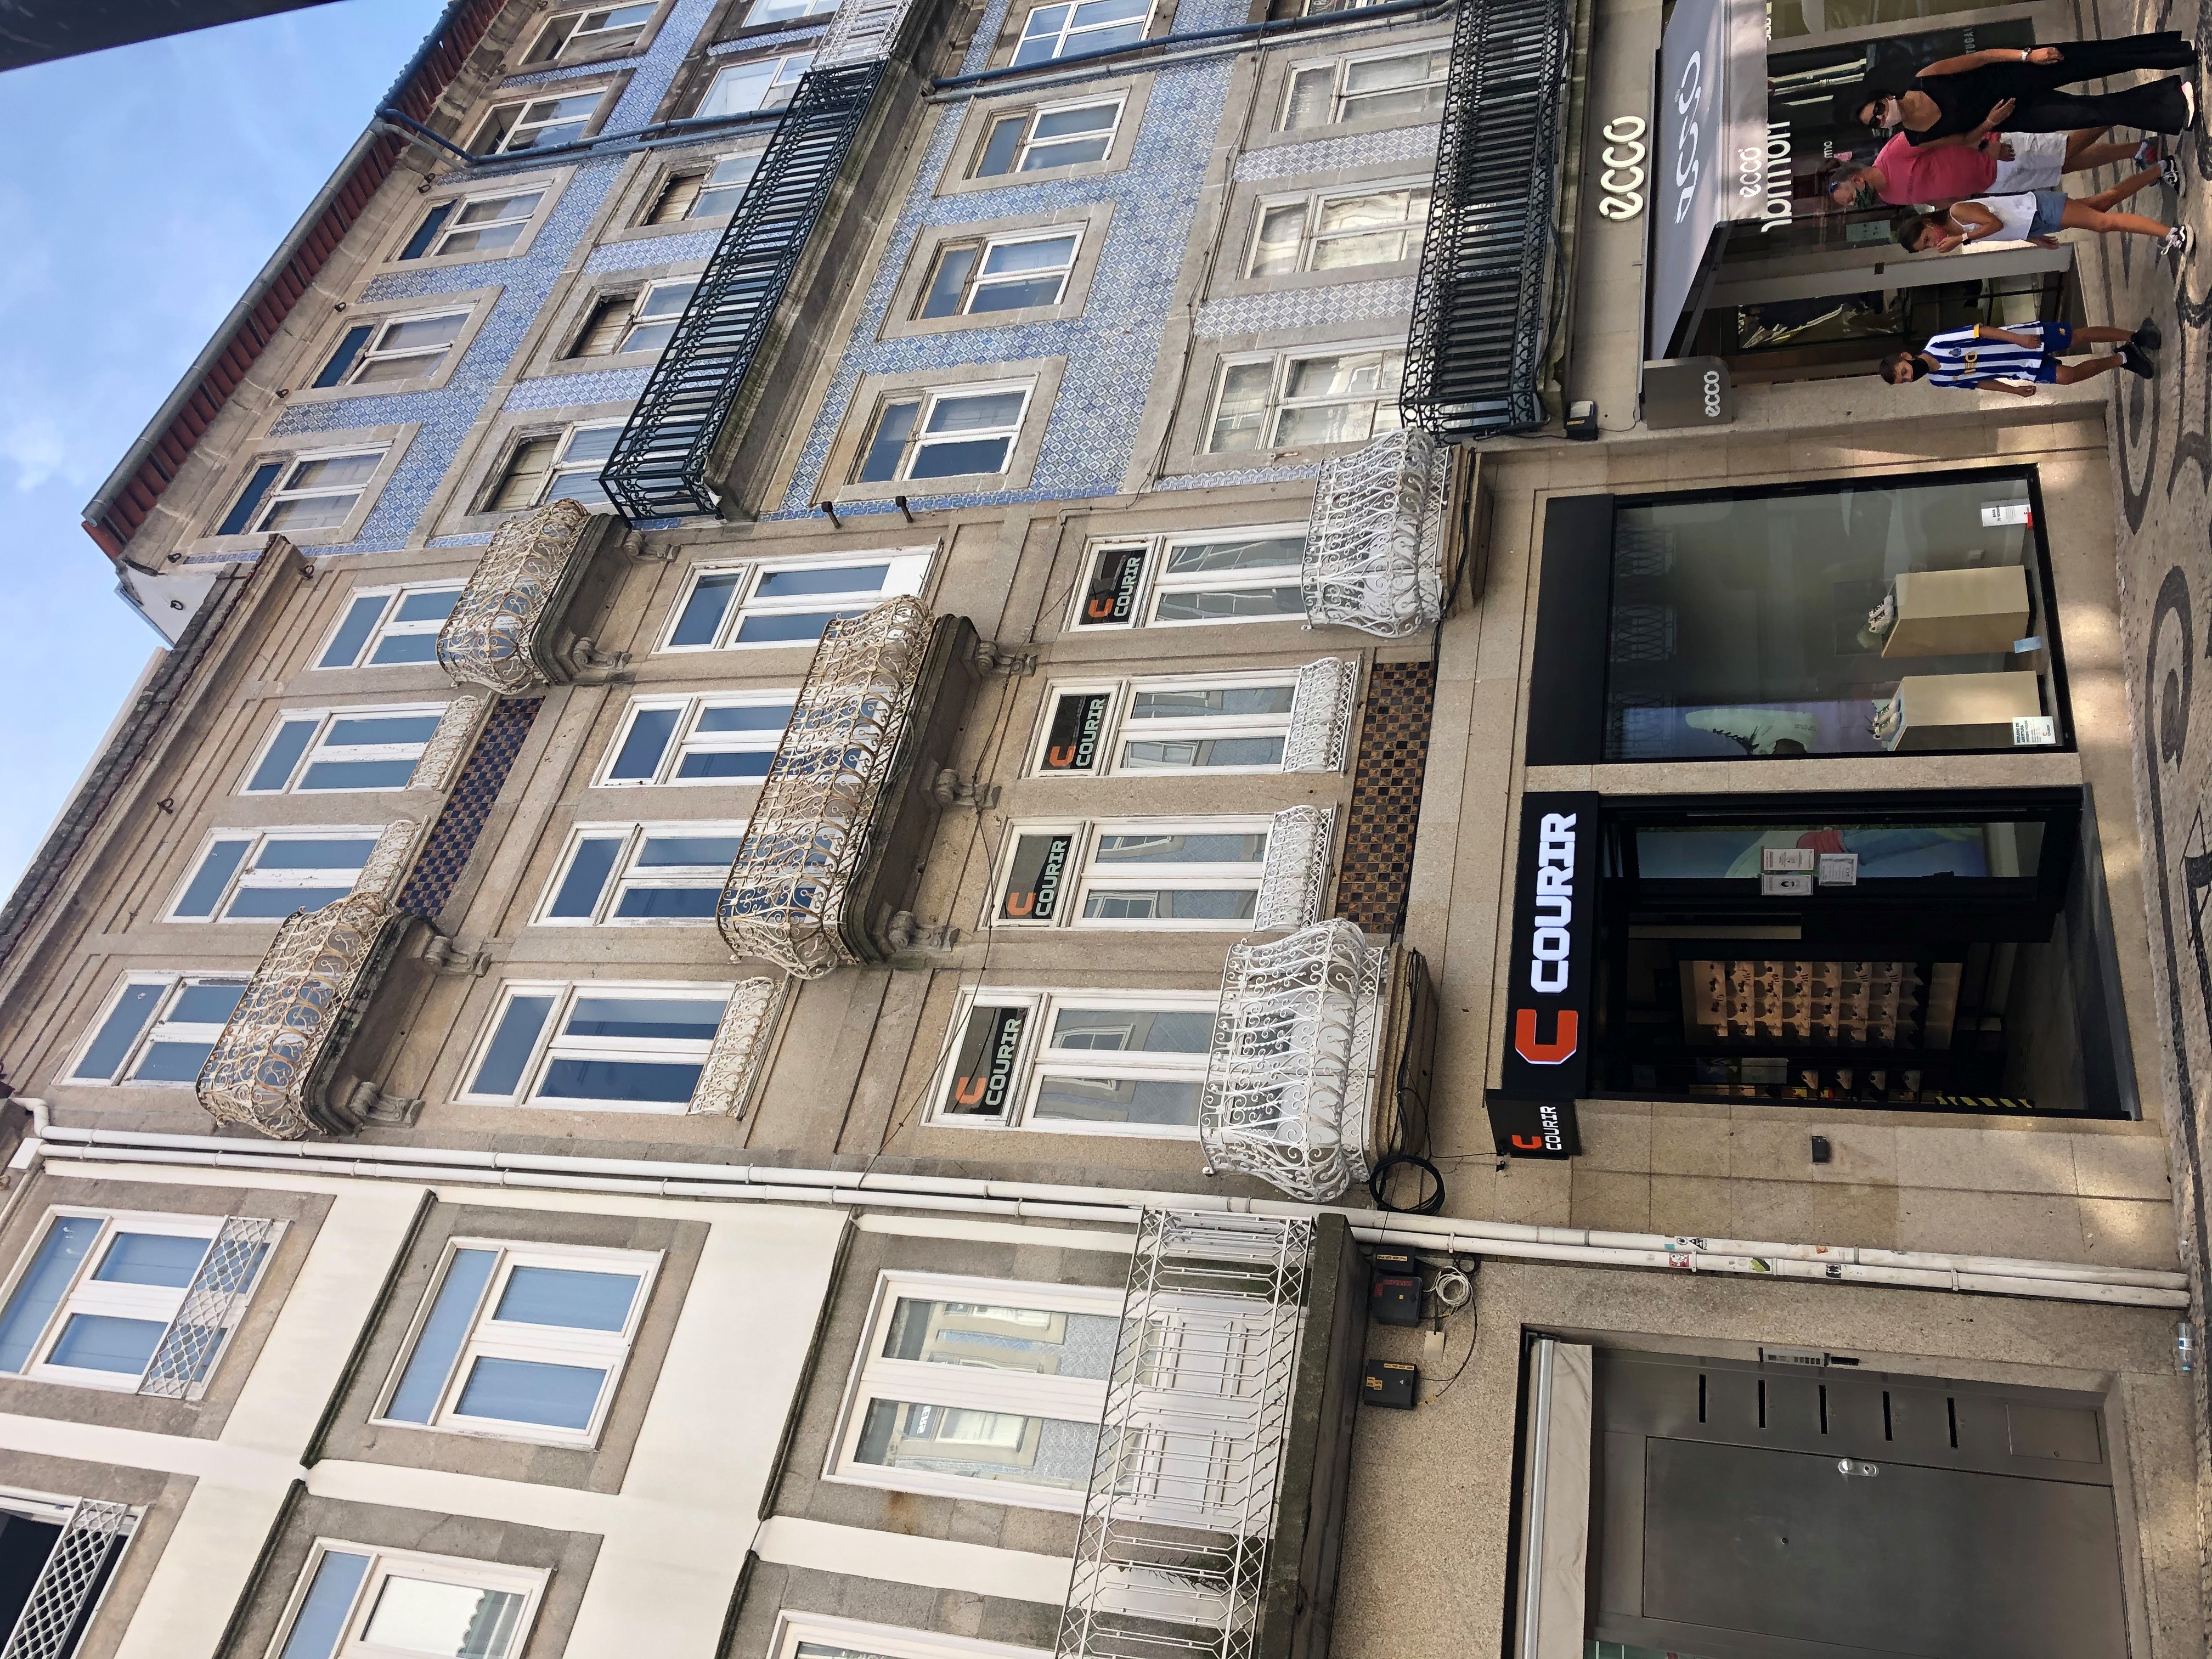 Lynx AM buys a building on Rua de Santa Catarina for €5M